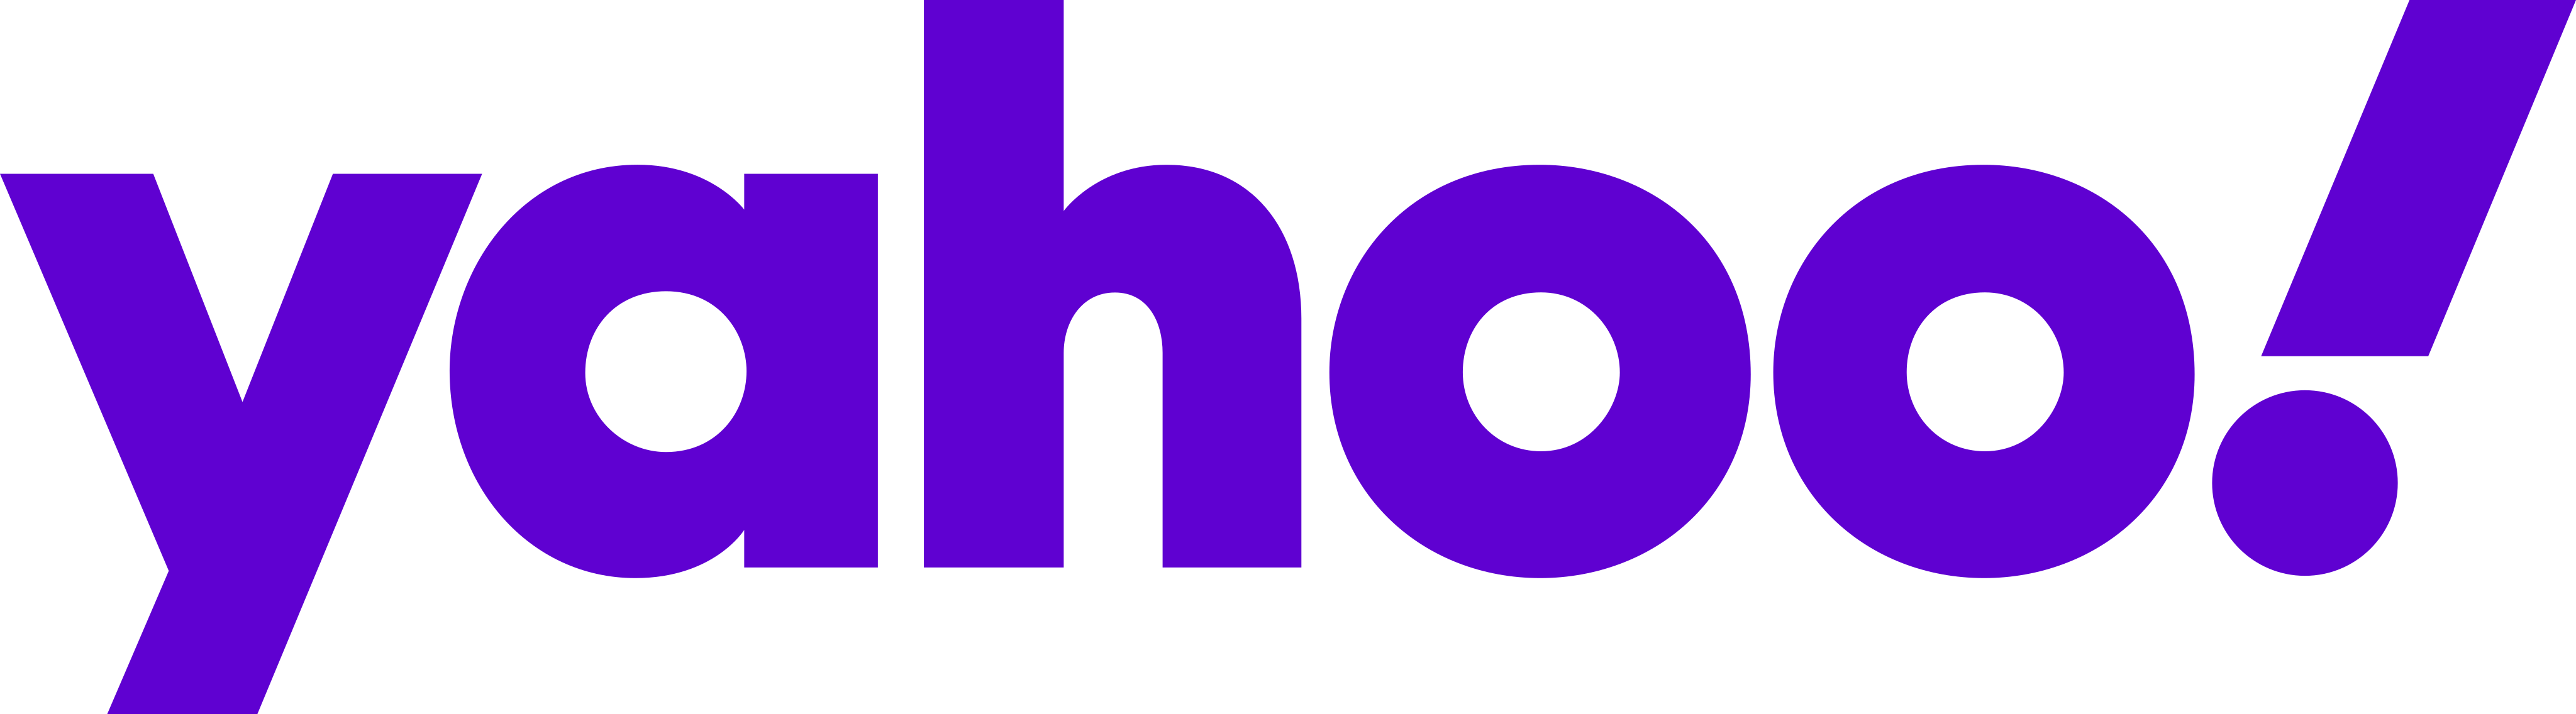 Yahoo! Logo   Png And Vector   Logo Download - Yahoo, Transparent background PNG HD thumbnail